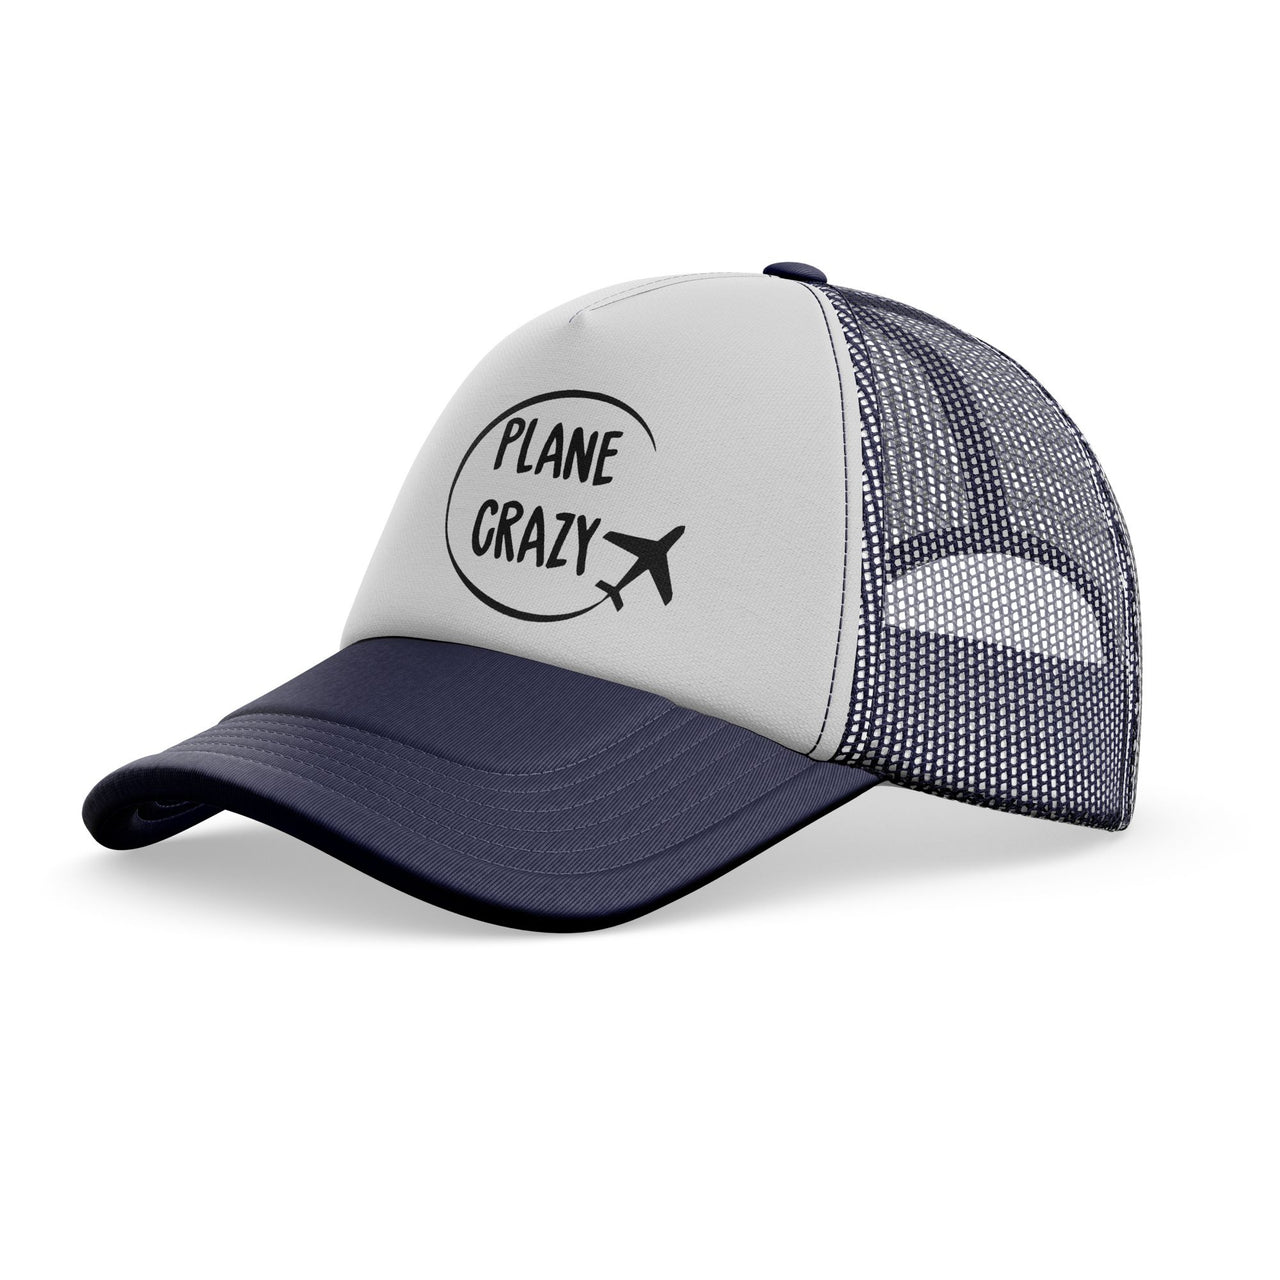 Plane Crazy Designed Trucker Caps & Hats